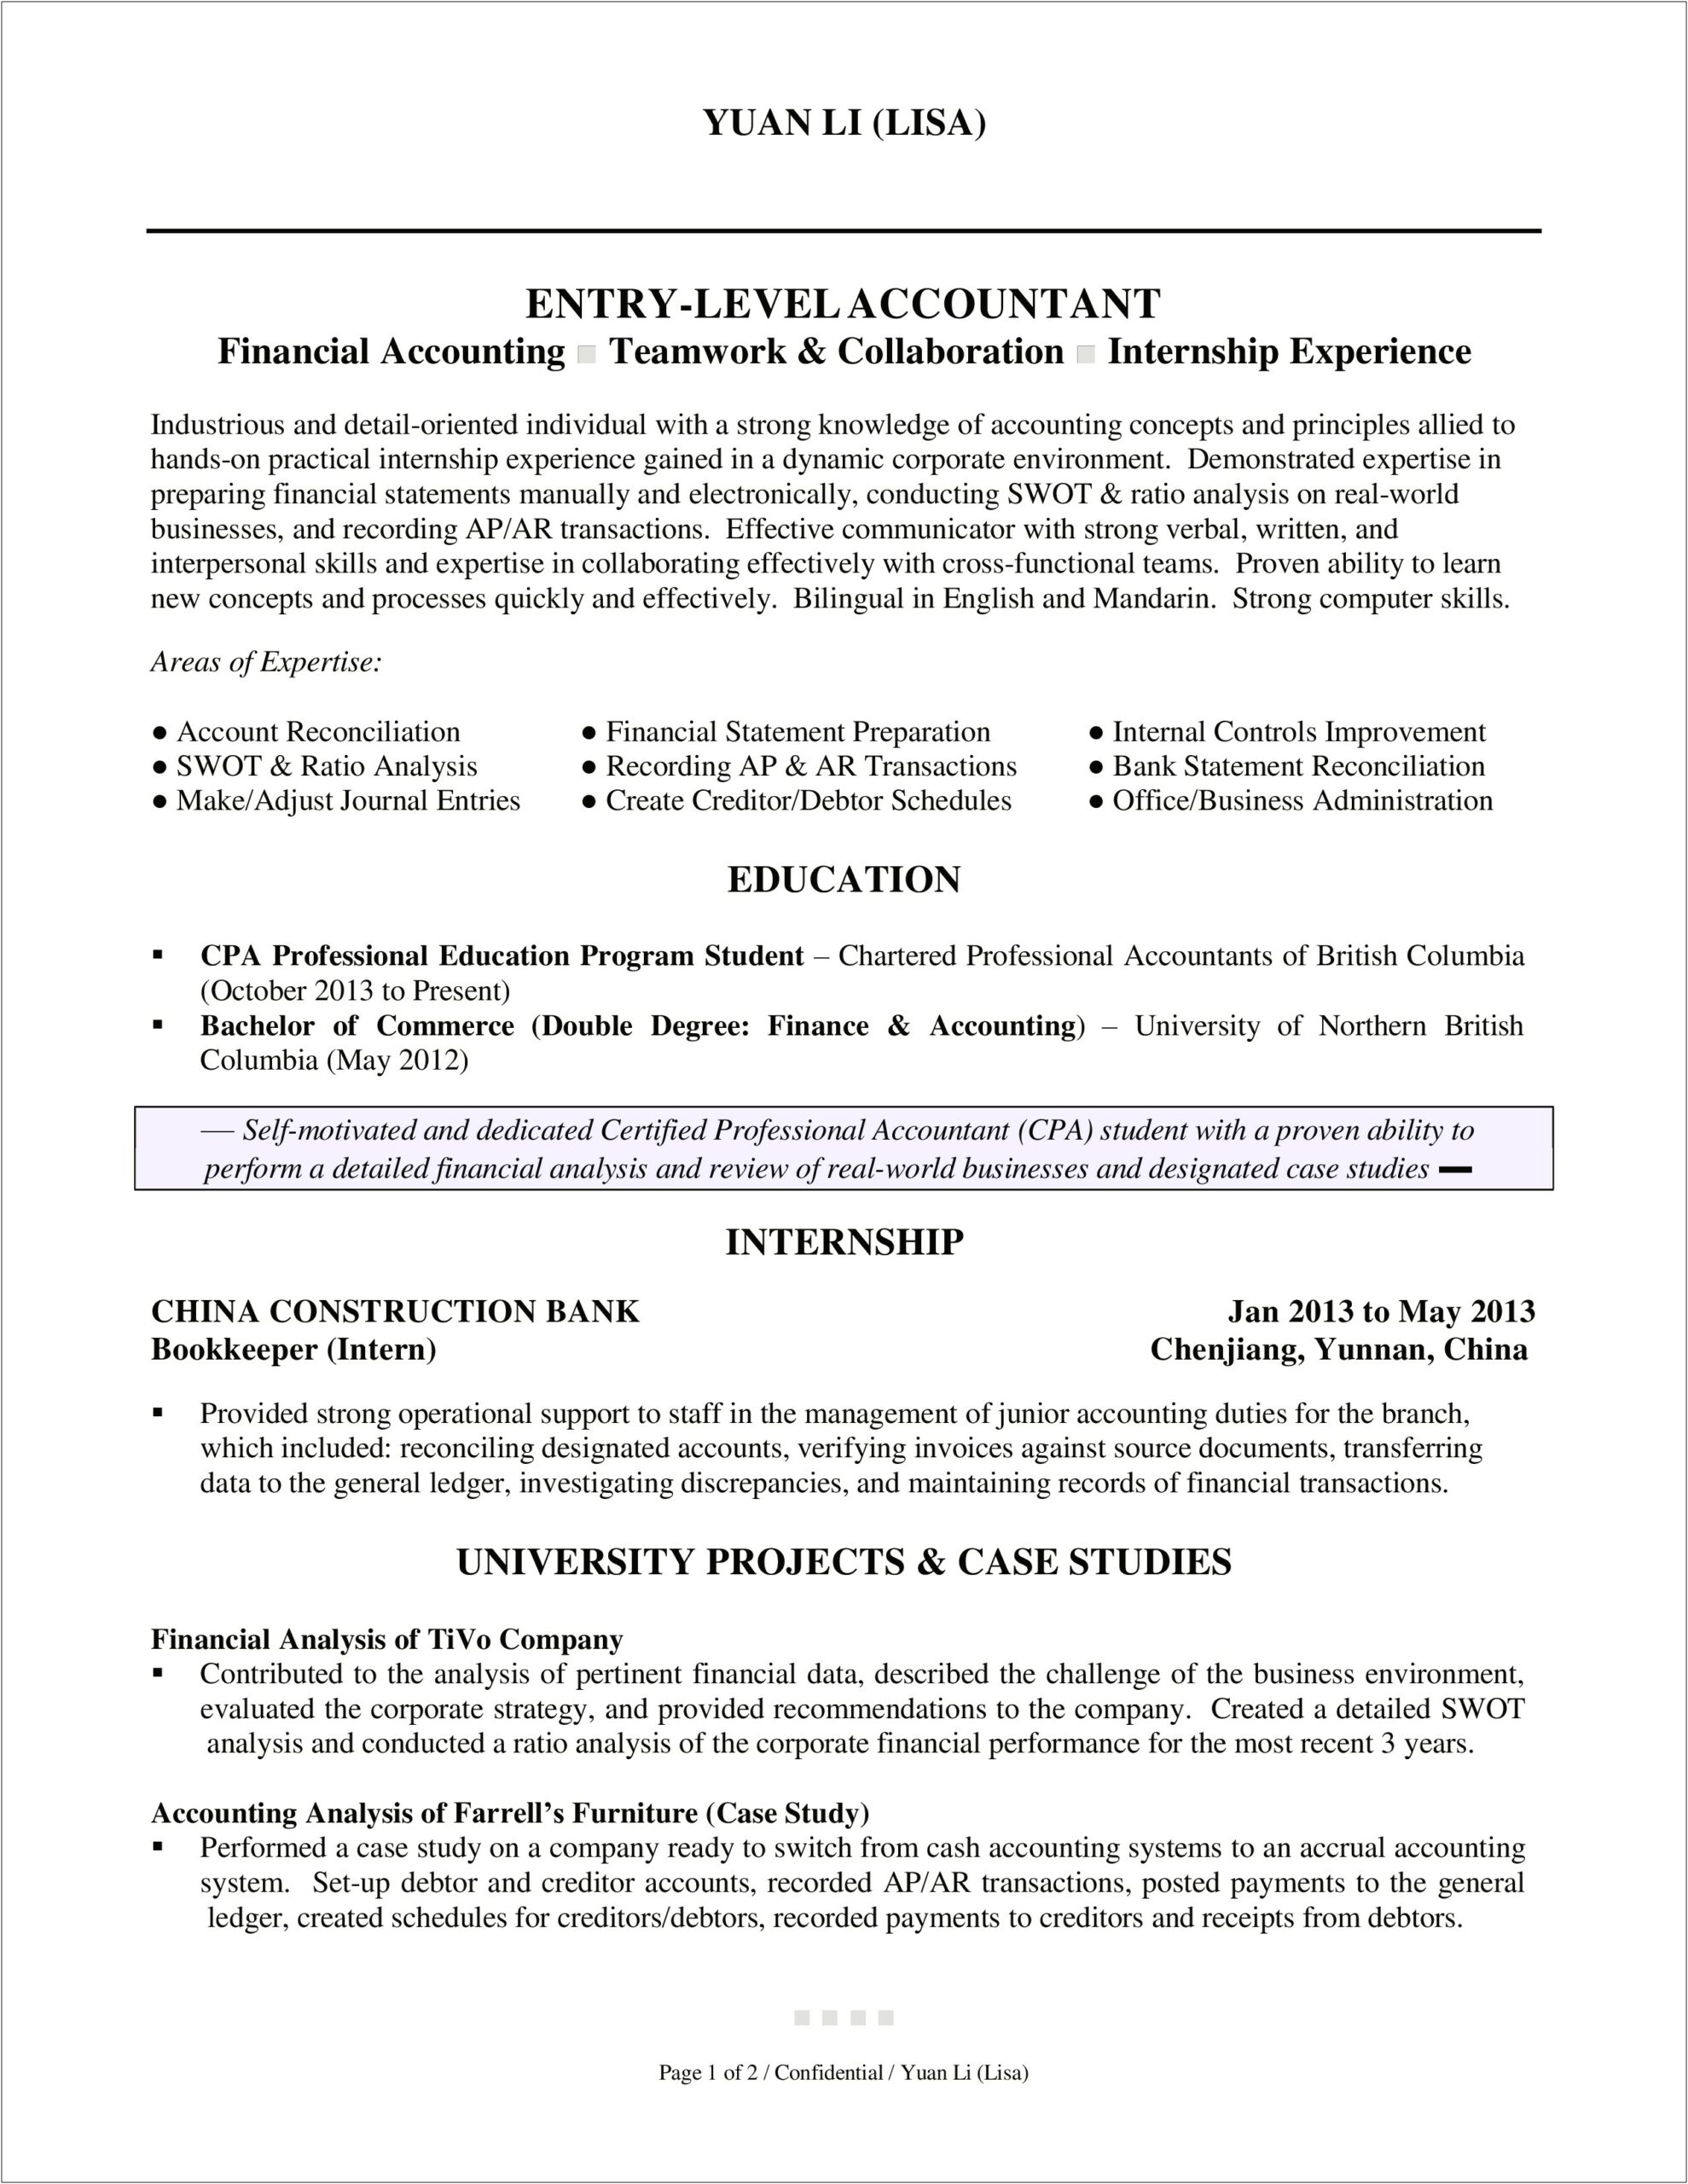 Accountant Summary 1 Year Of Experience Resume